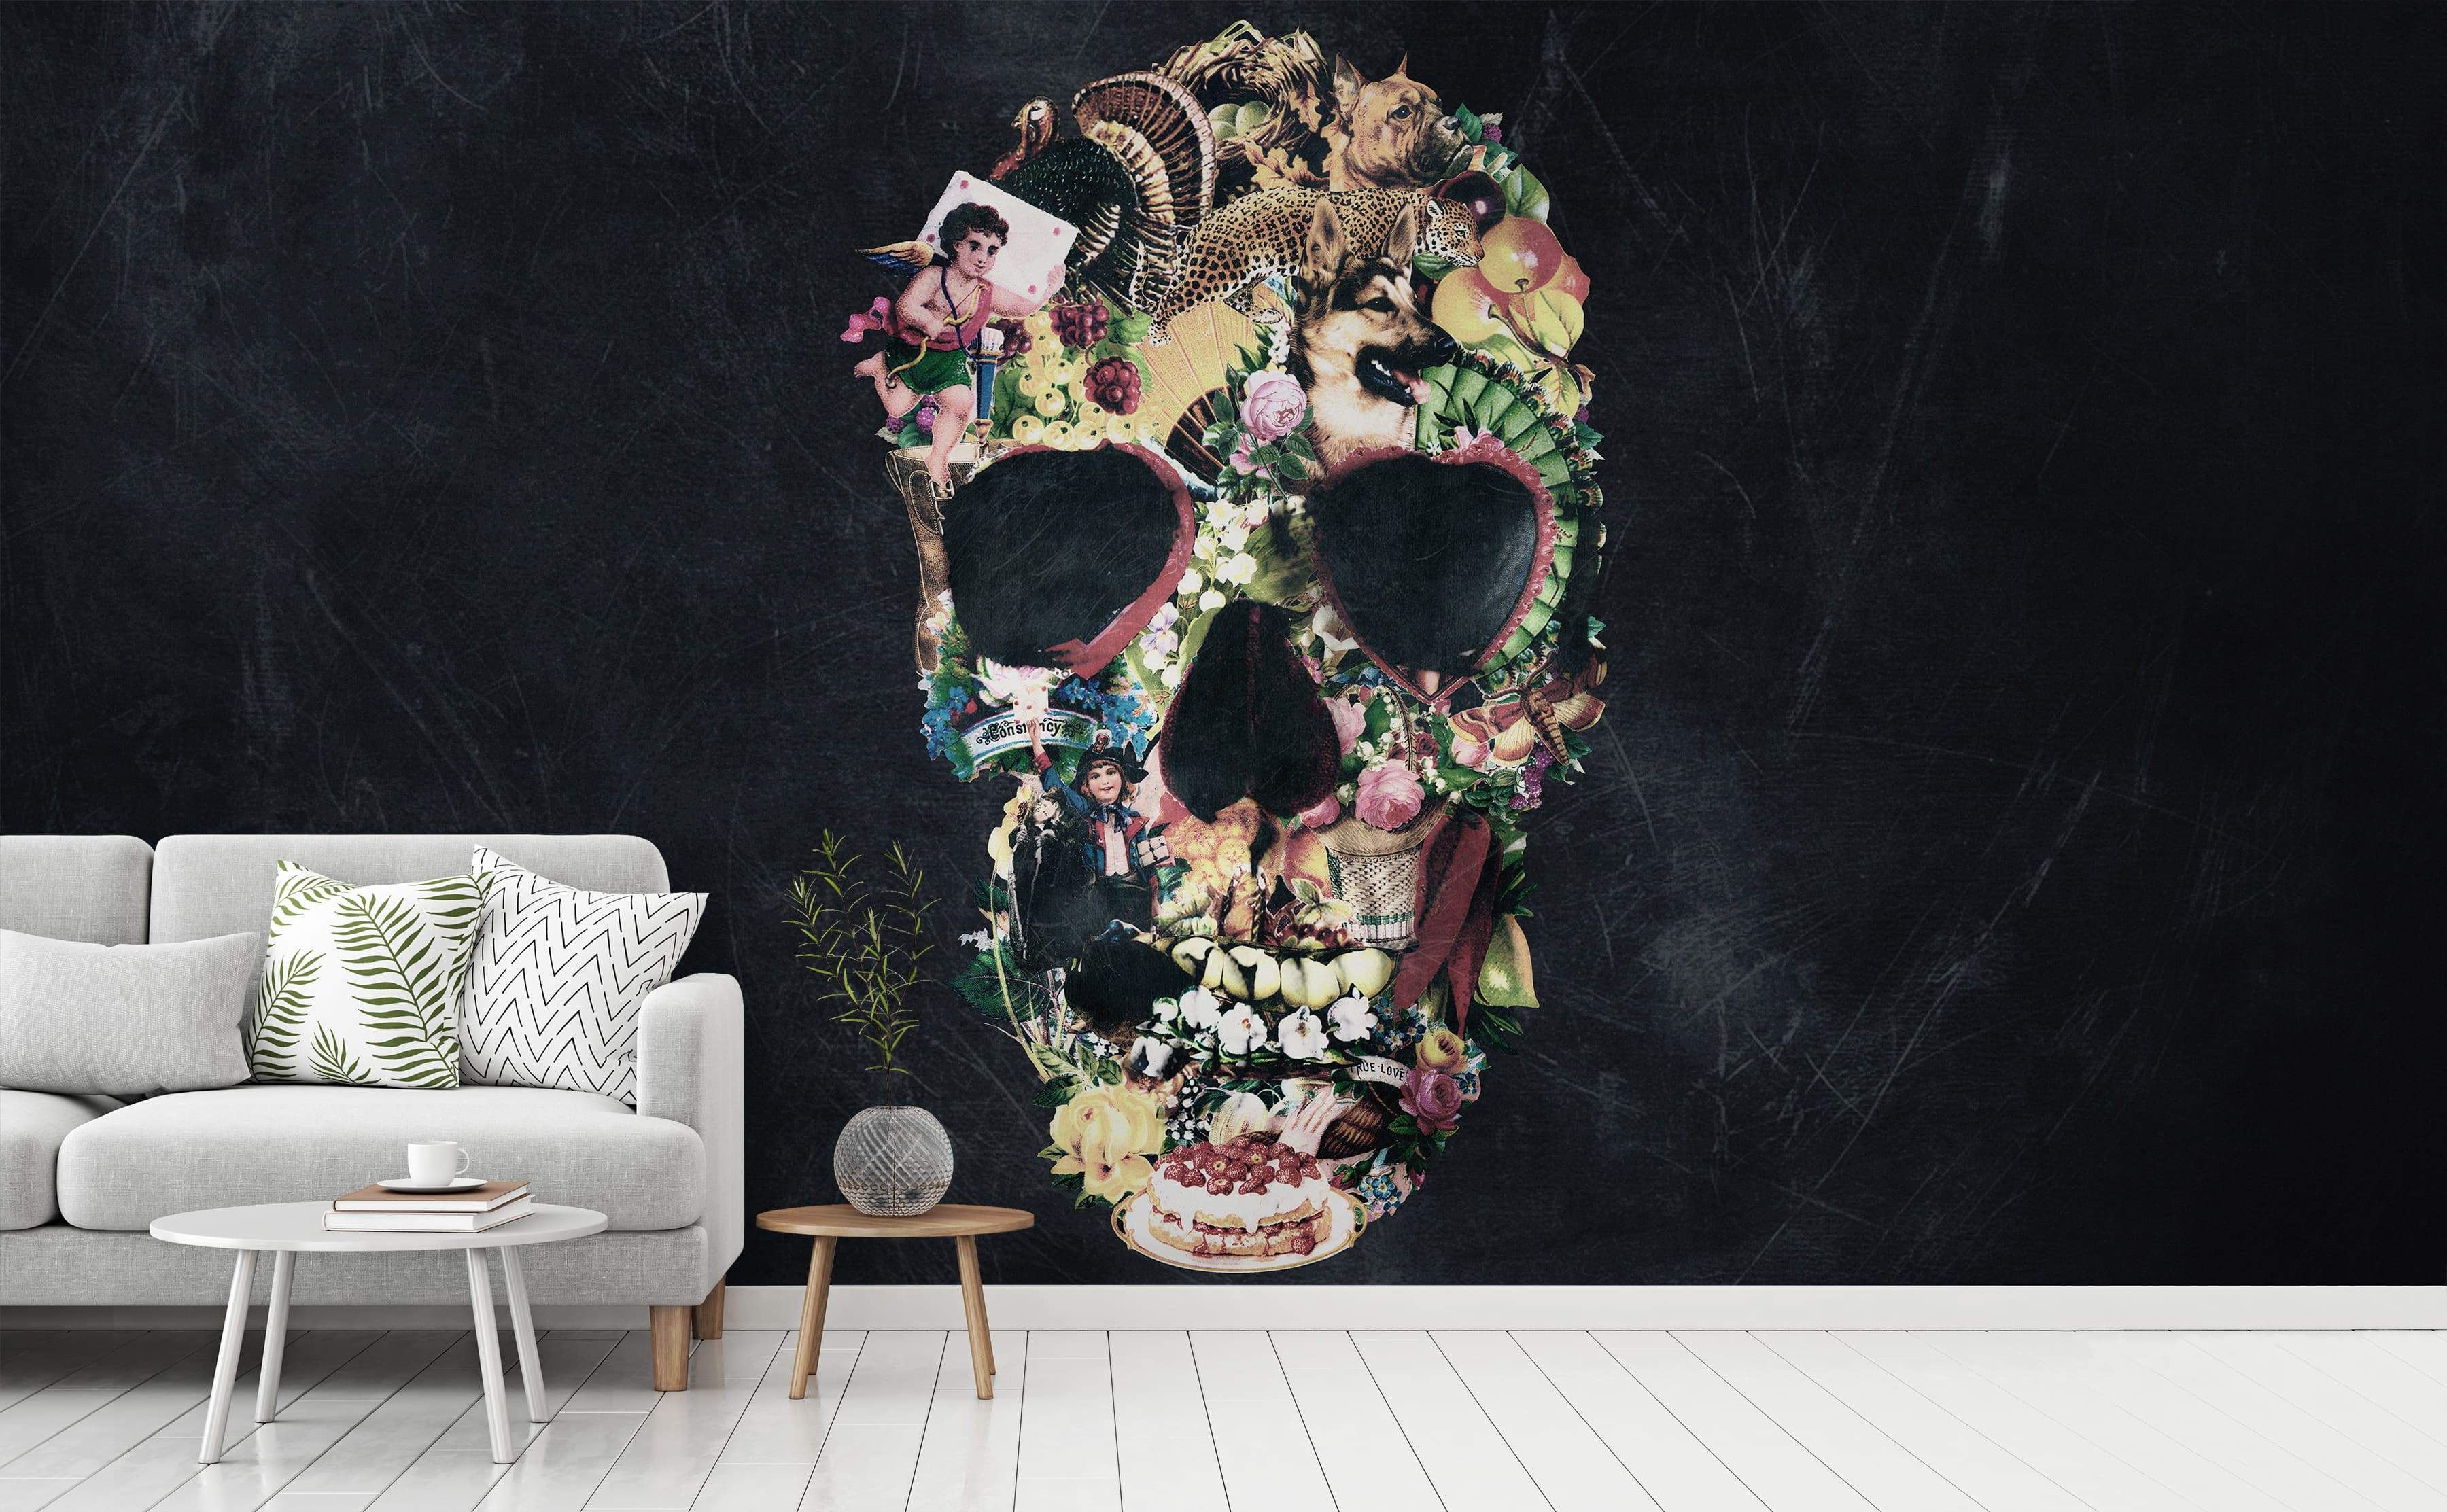 Skull Wallpaper Images  Free Download on Freepik